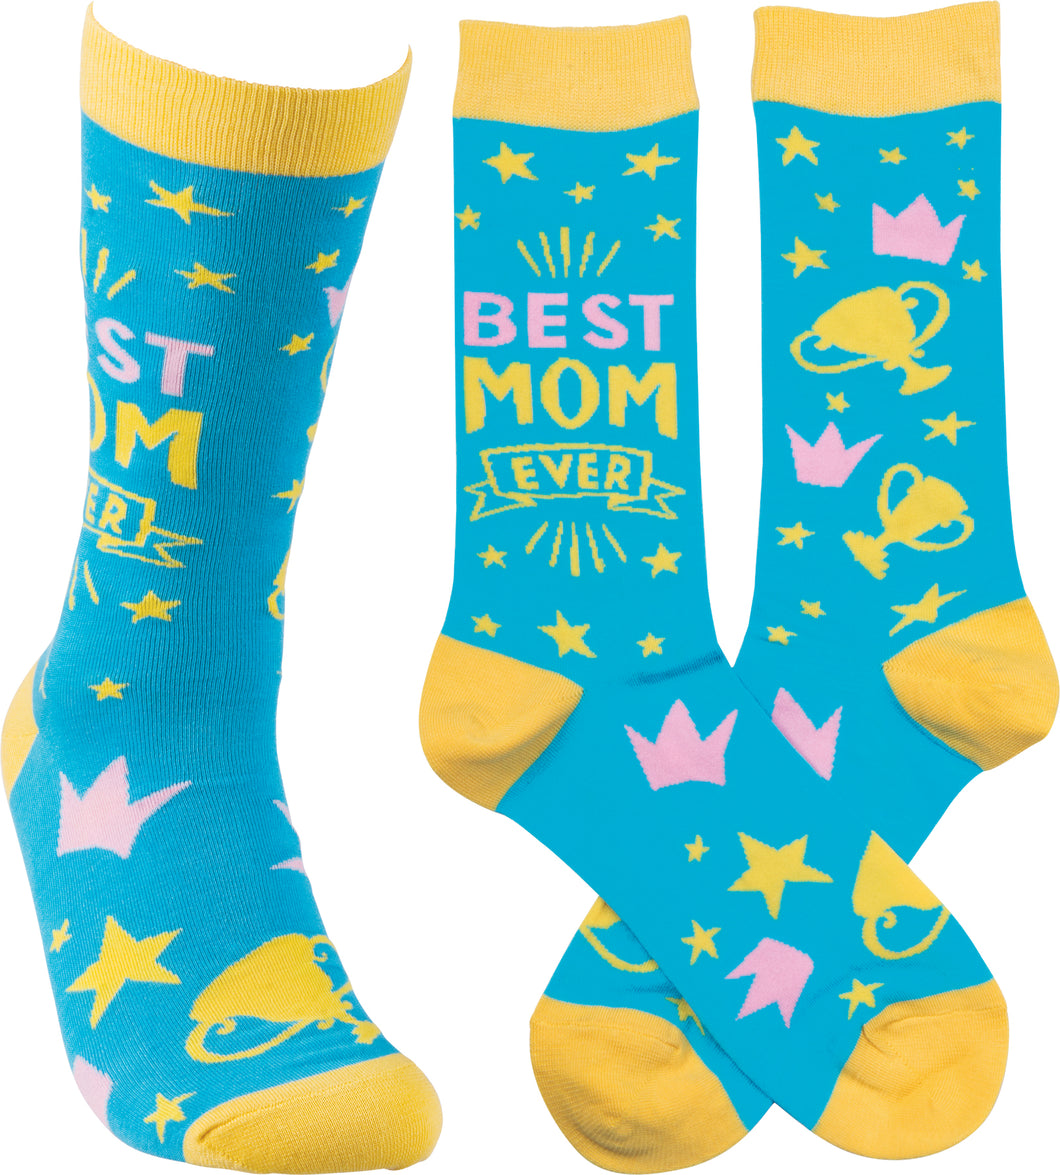 Best Mom Ever - Crew Socks